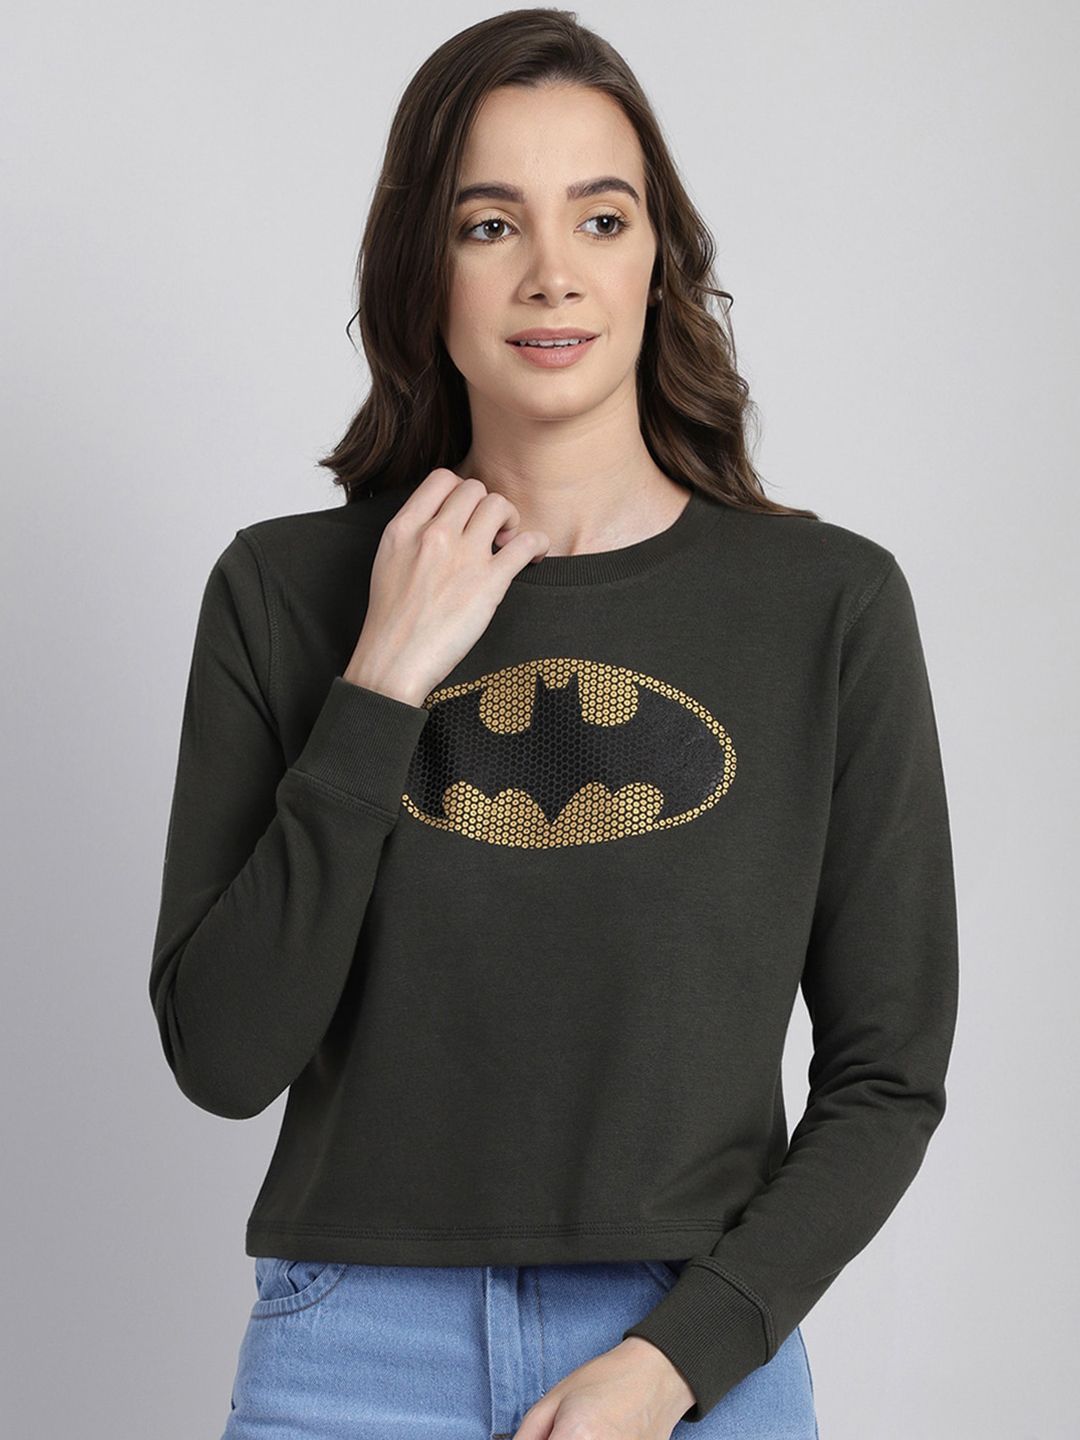 Free Authority Women Olive Green Batman Printed Sweatshirt Price in India